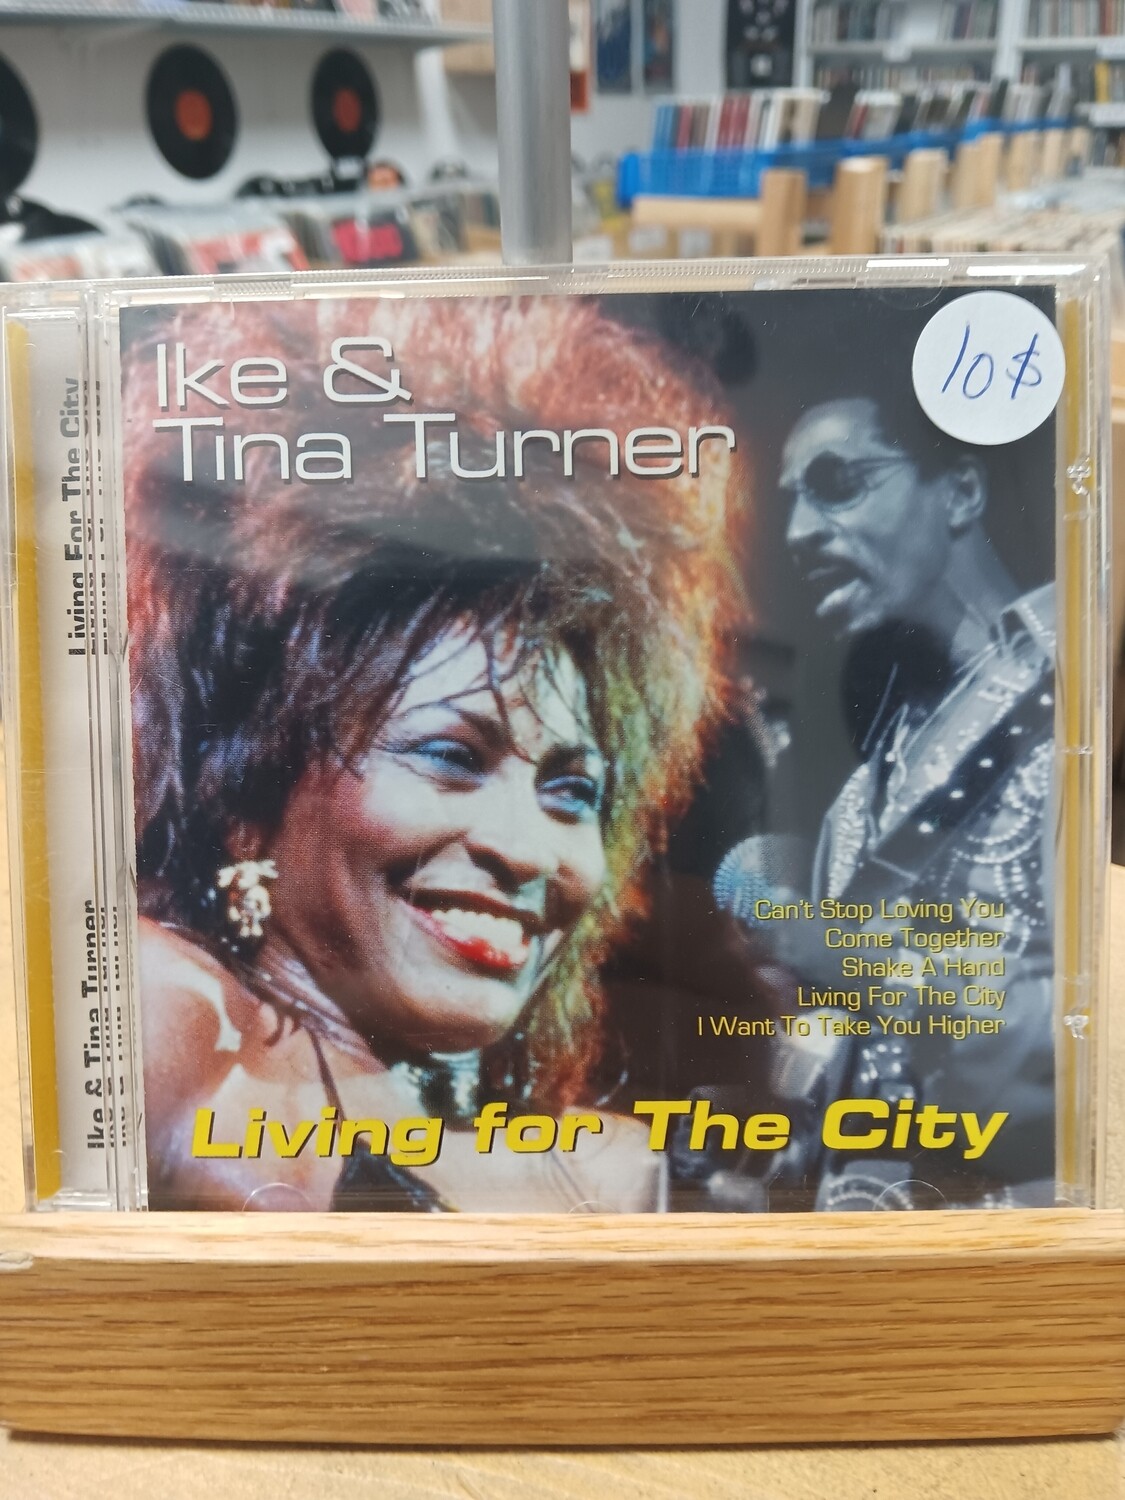 IKE & TINA TURNER - Living for the city (CD)